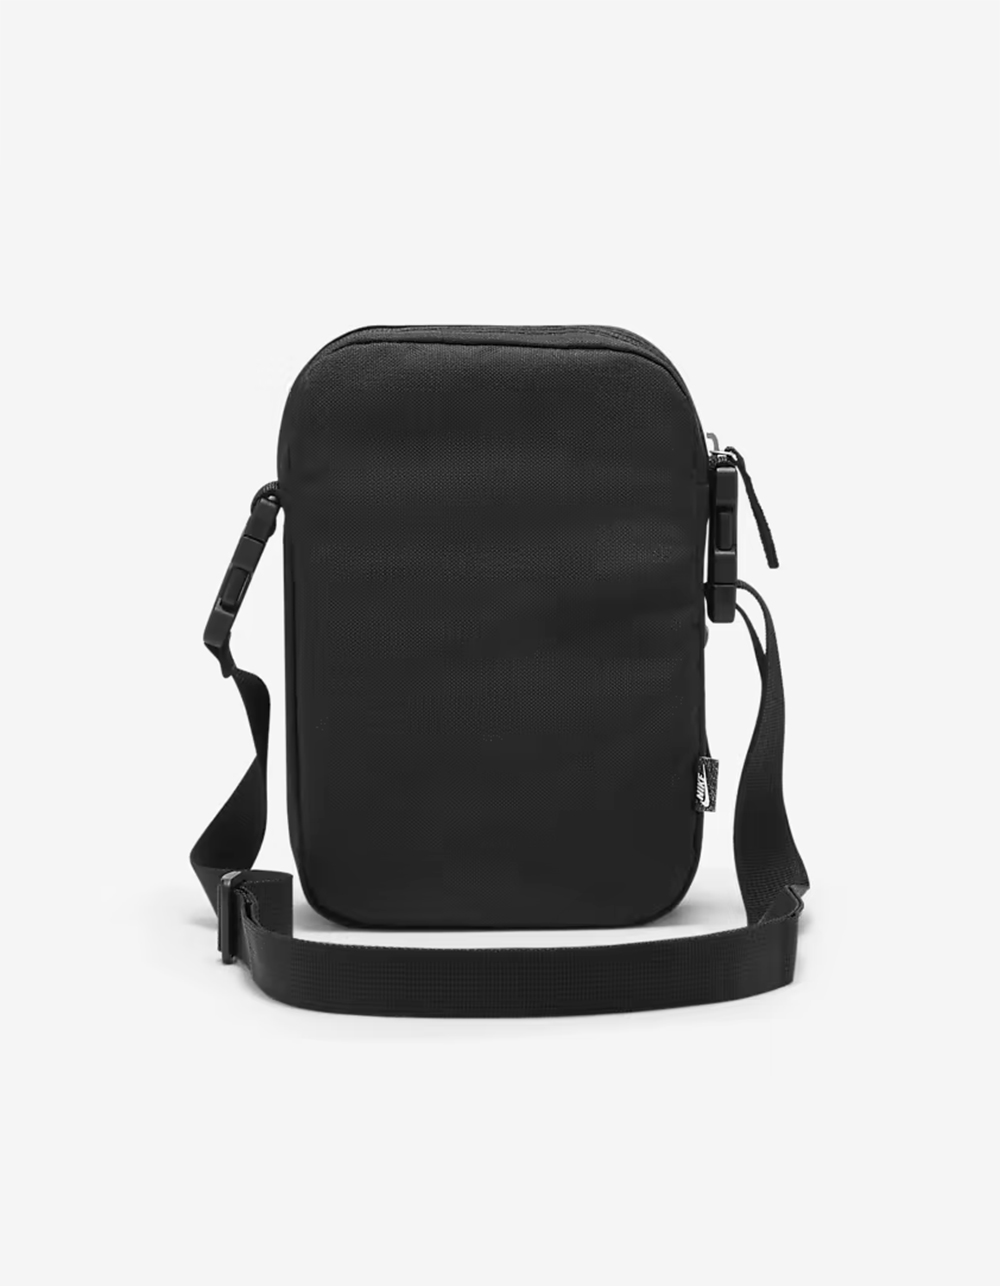 Nike Heritage 2.0 Crossbody Bag In Black/black/white - FREE